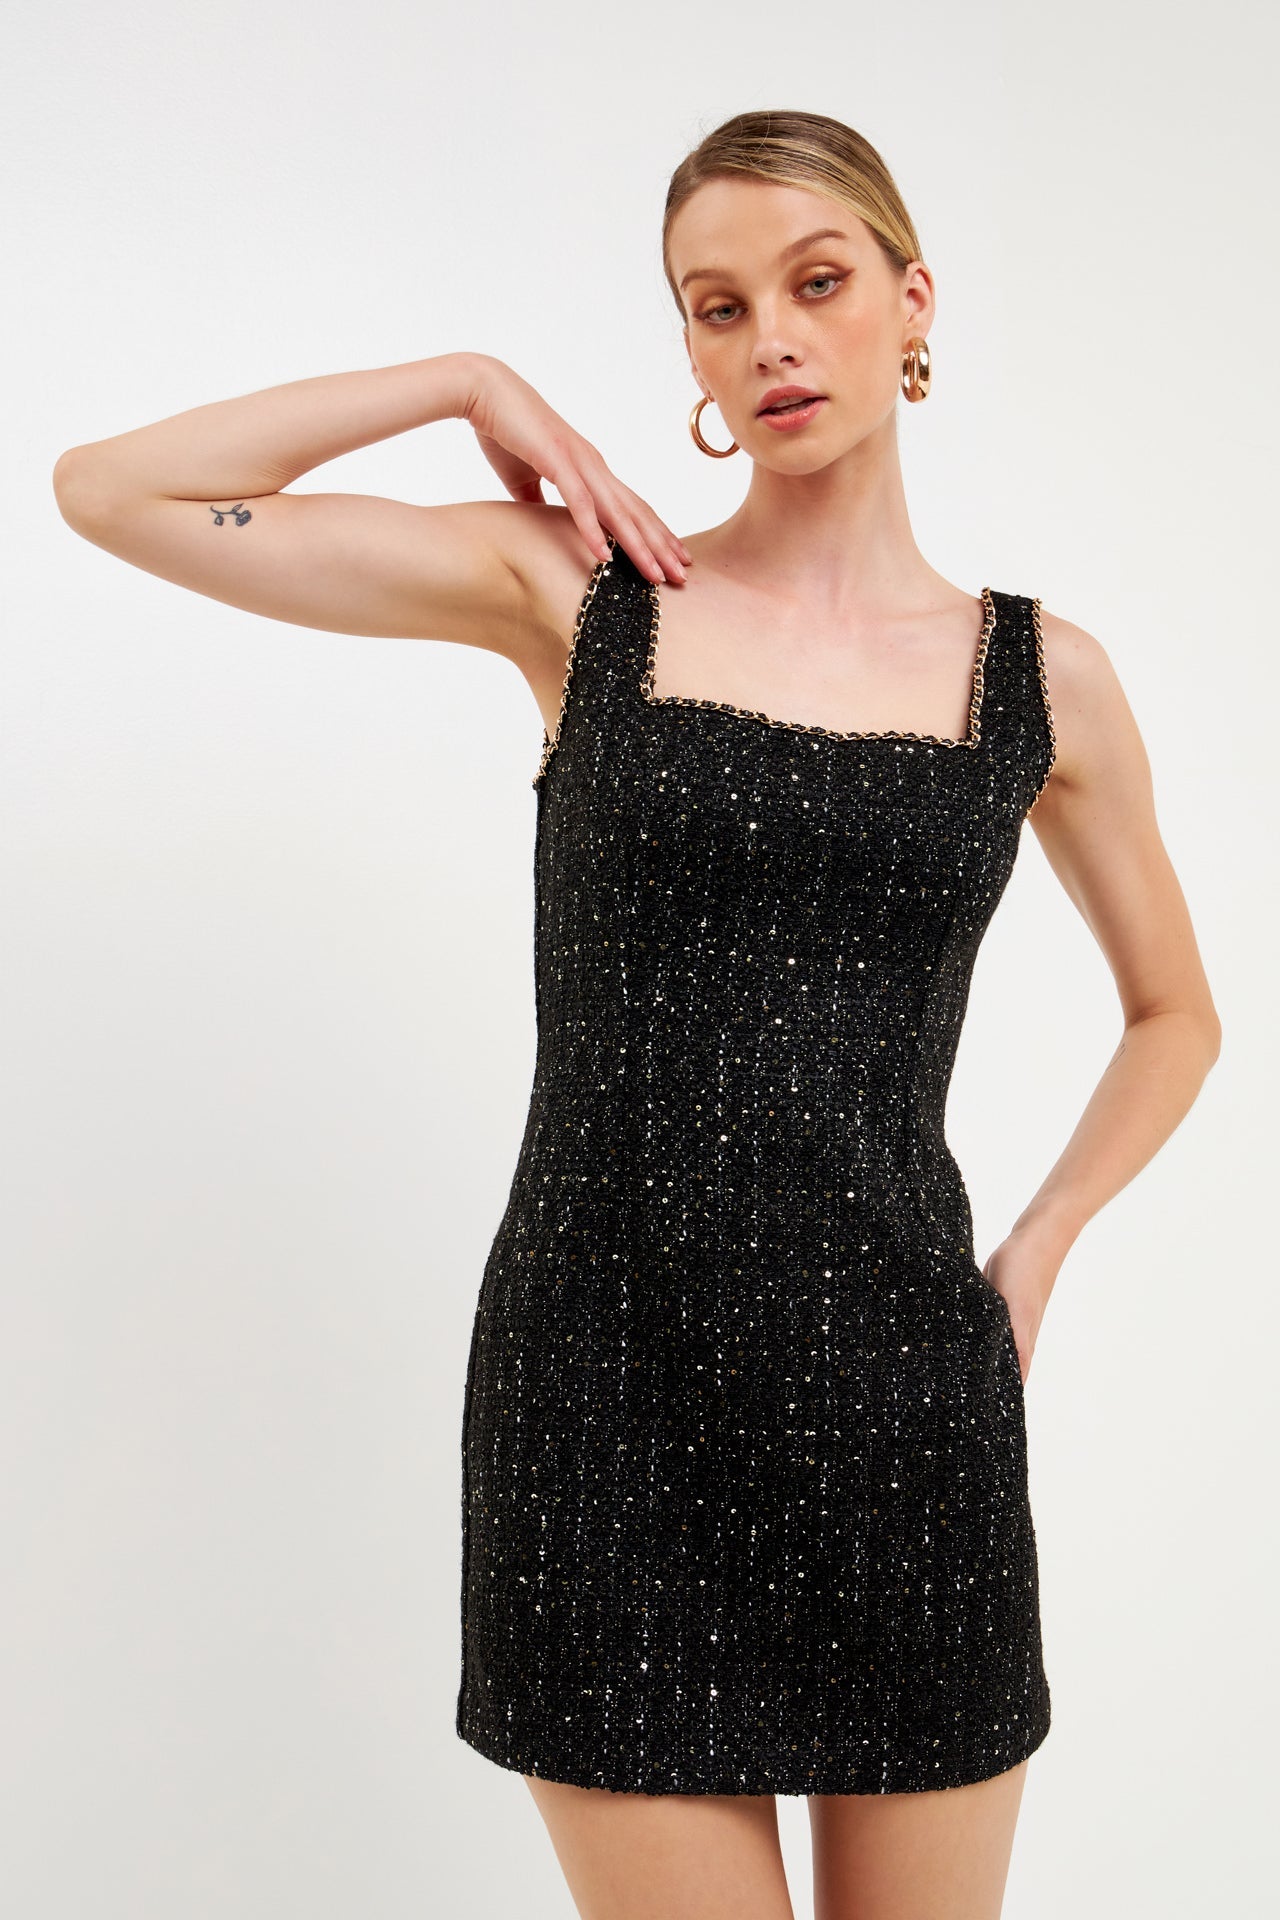 Women's Pleather Bodycon Ultra-Mini Dress - Scooped Neckline / Black